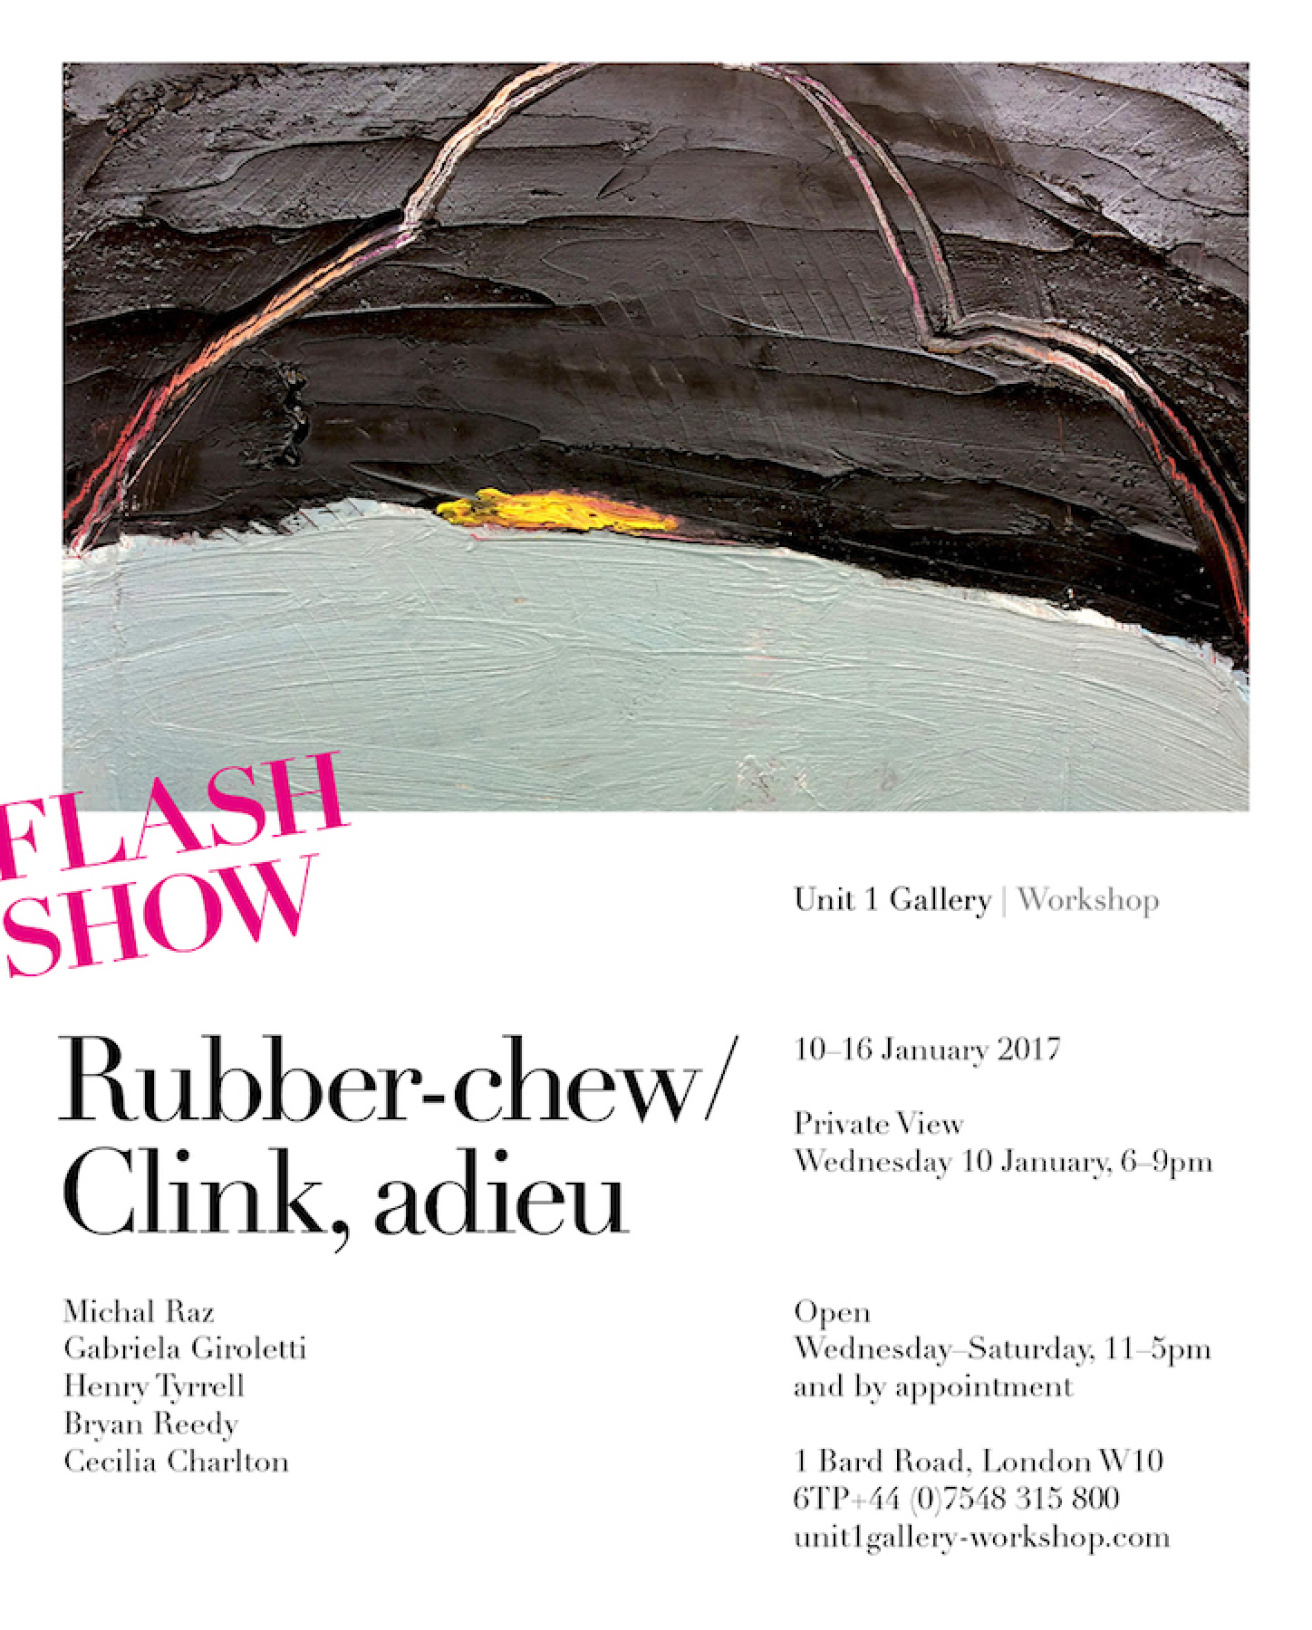 Rubber-chew Clink, adieu - Unit 1 Gallery